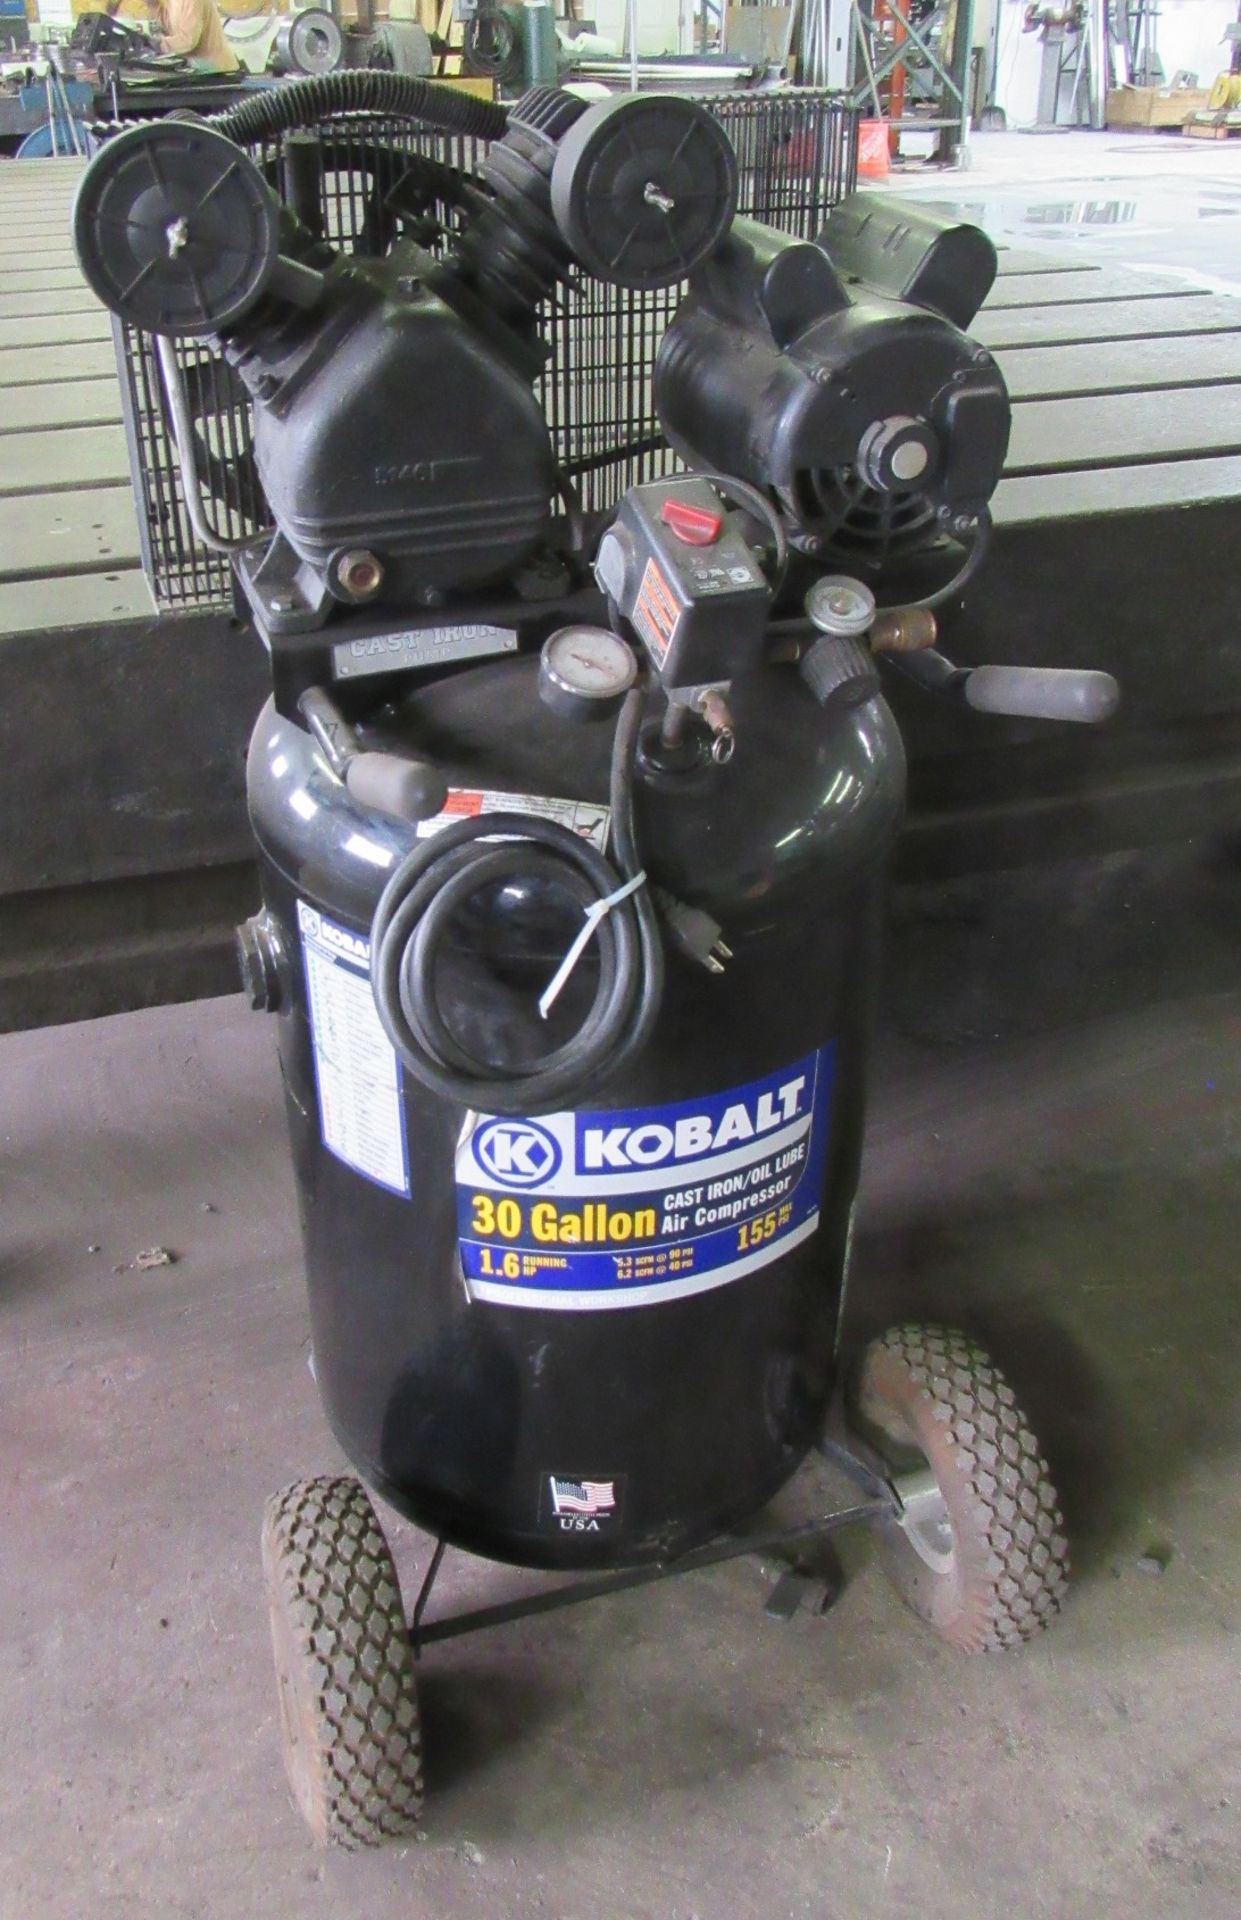 Kobalt Mod. 221495 30 Gallon Air Compressor